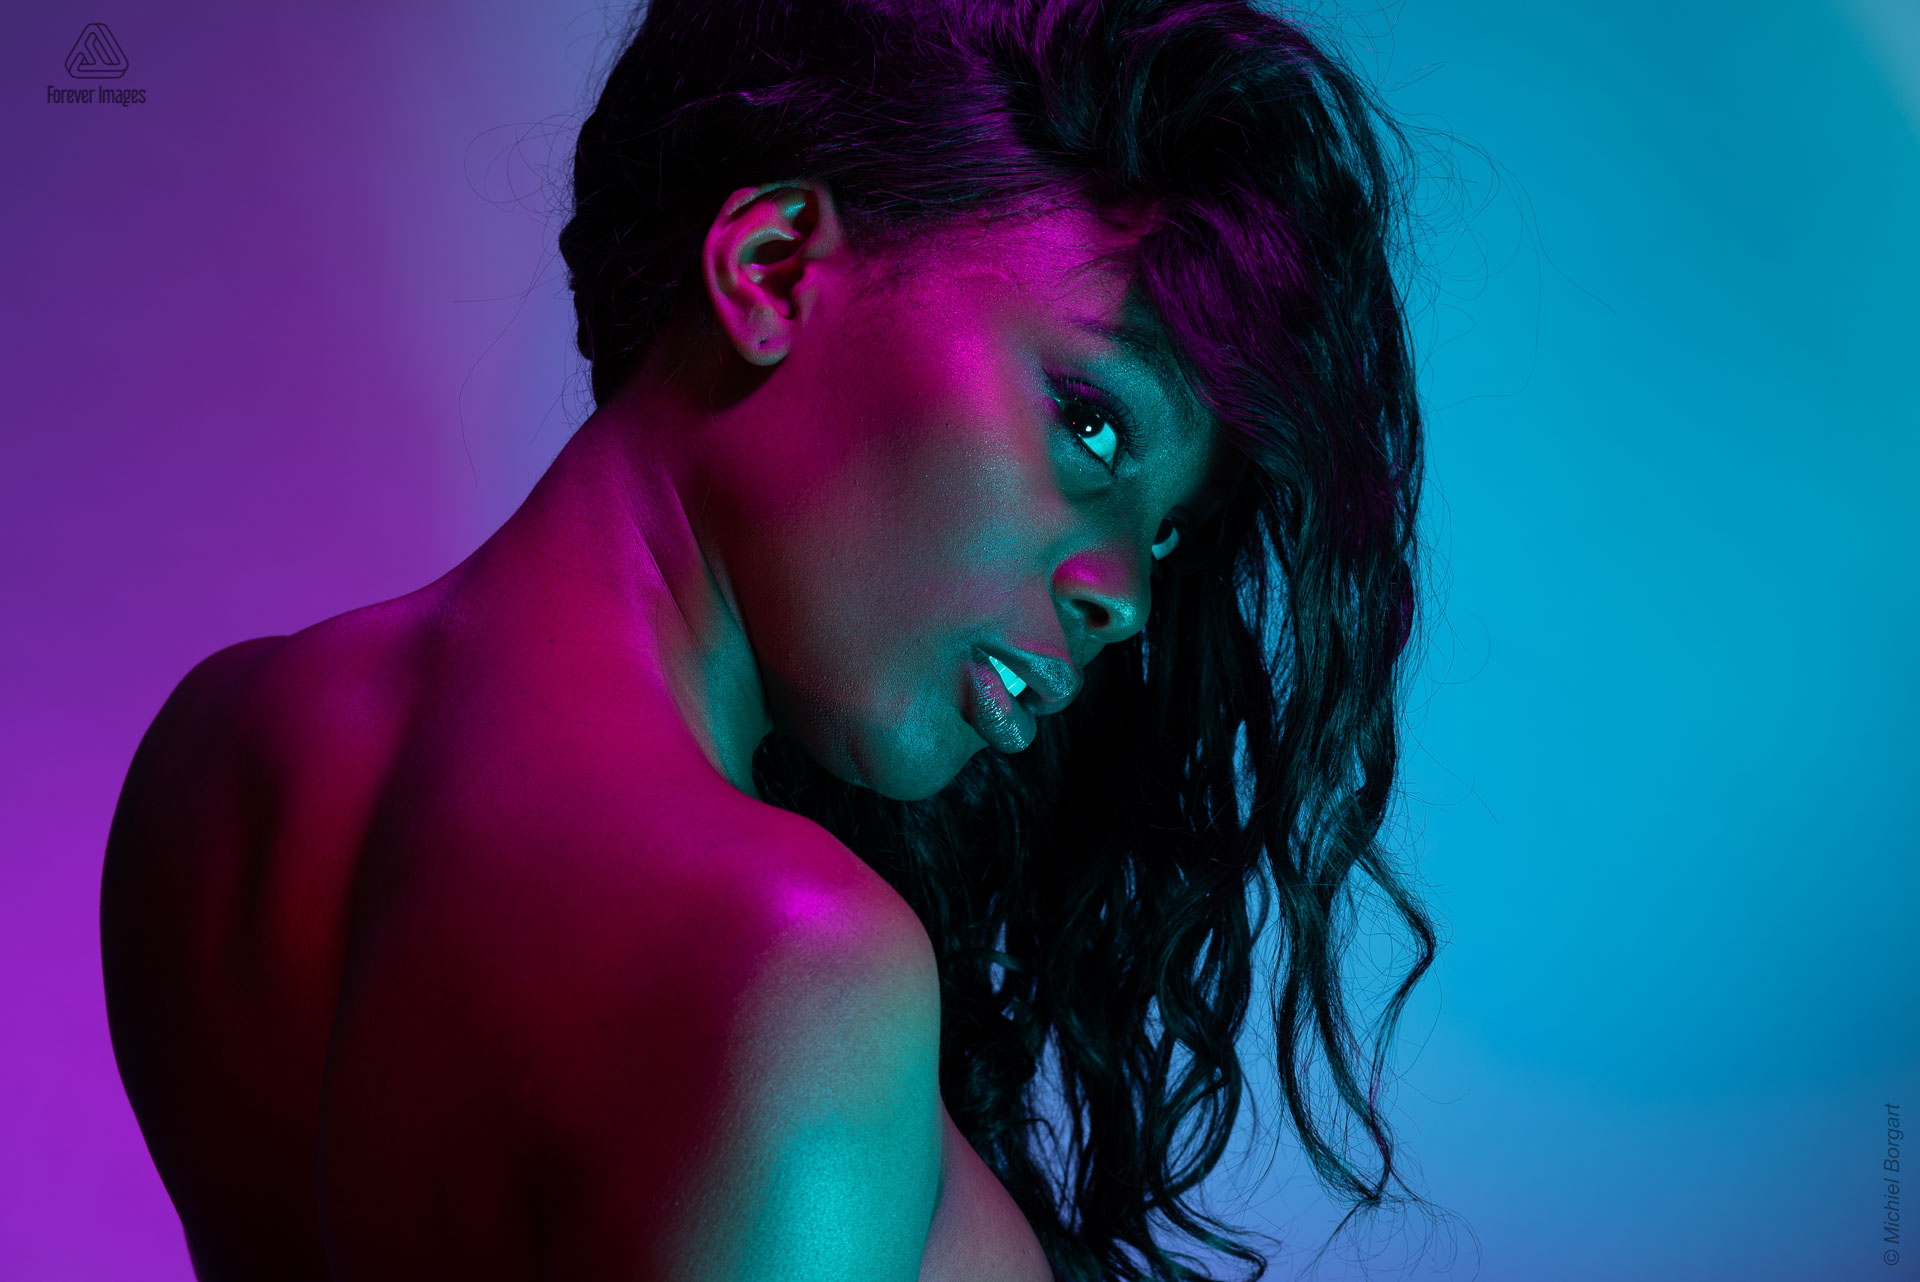 Portretfoto model paars rood groen licht mooie rug naar achter kijken | Mariana Pietersz Miss Avantgarde | Portretfotograaf Michiel Borgart - Forever Images.